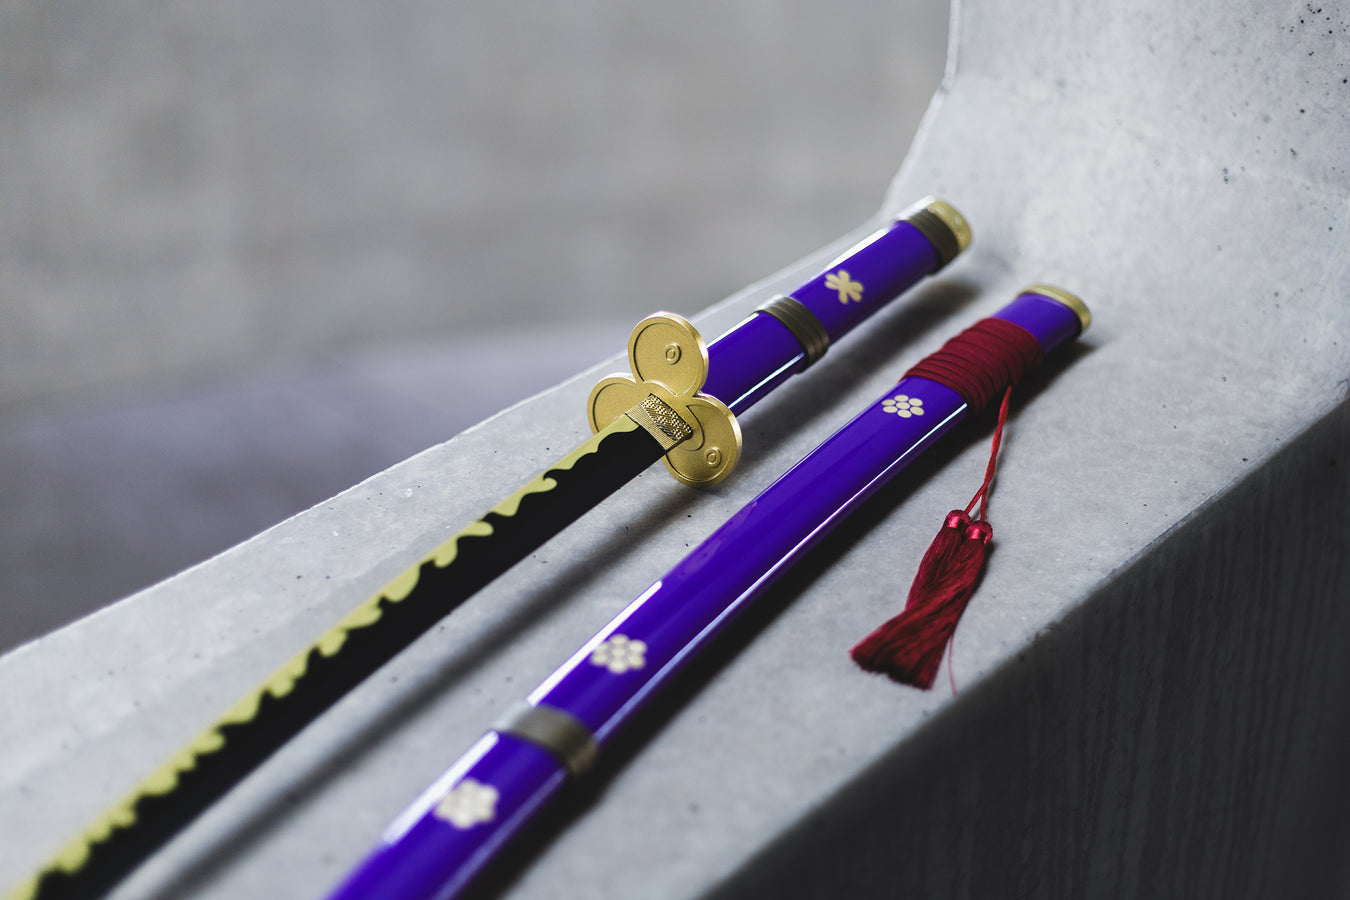 Zoro's purple enma sword and sheath on a concrete background.